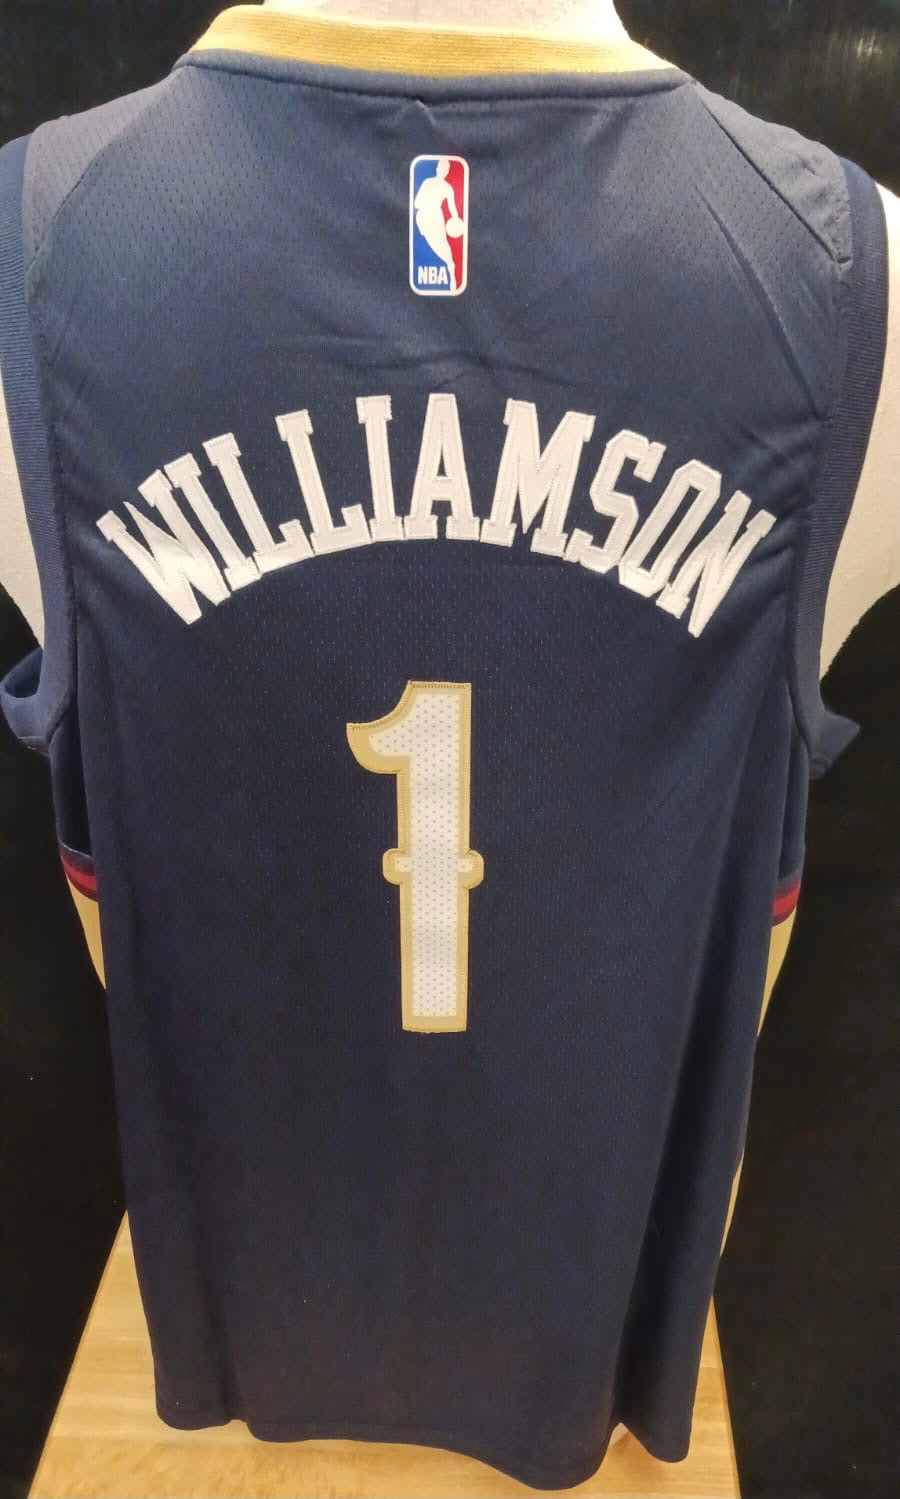 Zion Williamson, New Orleans Pelicans